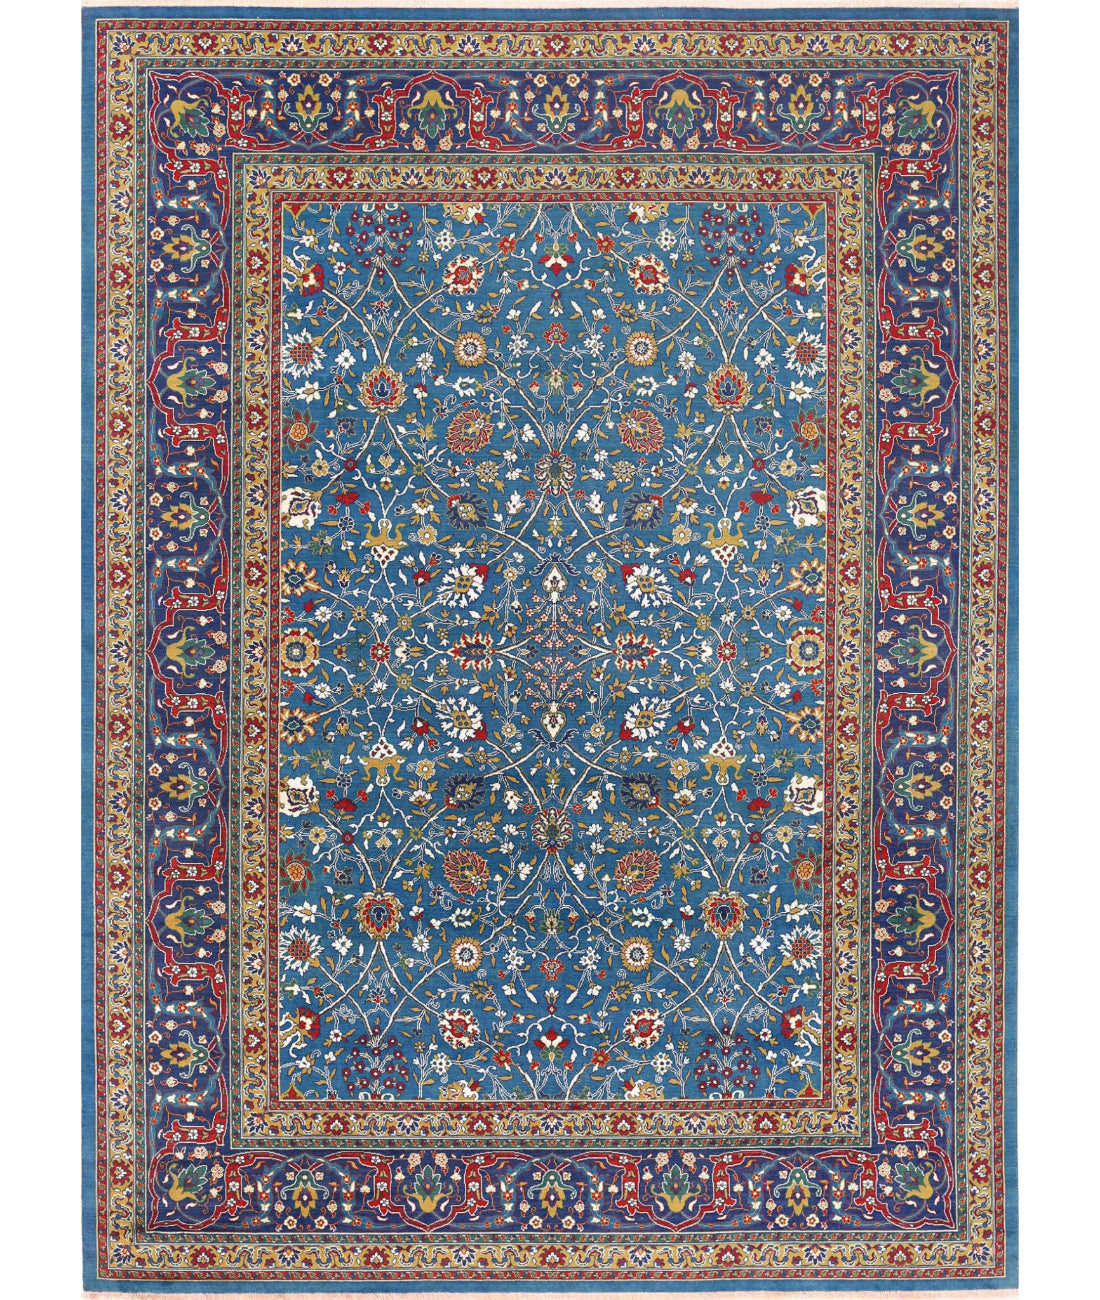 Gulshan Wool & Bamboo Silk Rug - 8'10'' x 12'1'' 8'10'' x 12'1'' (265 X 363) / Teal / Blue